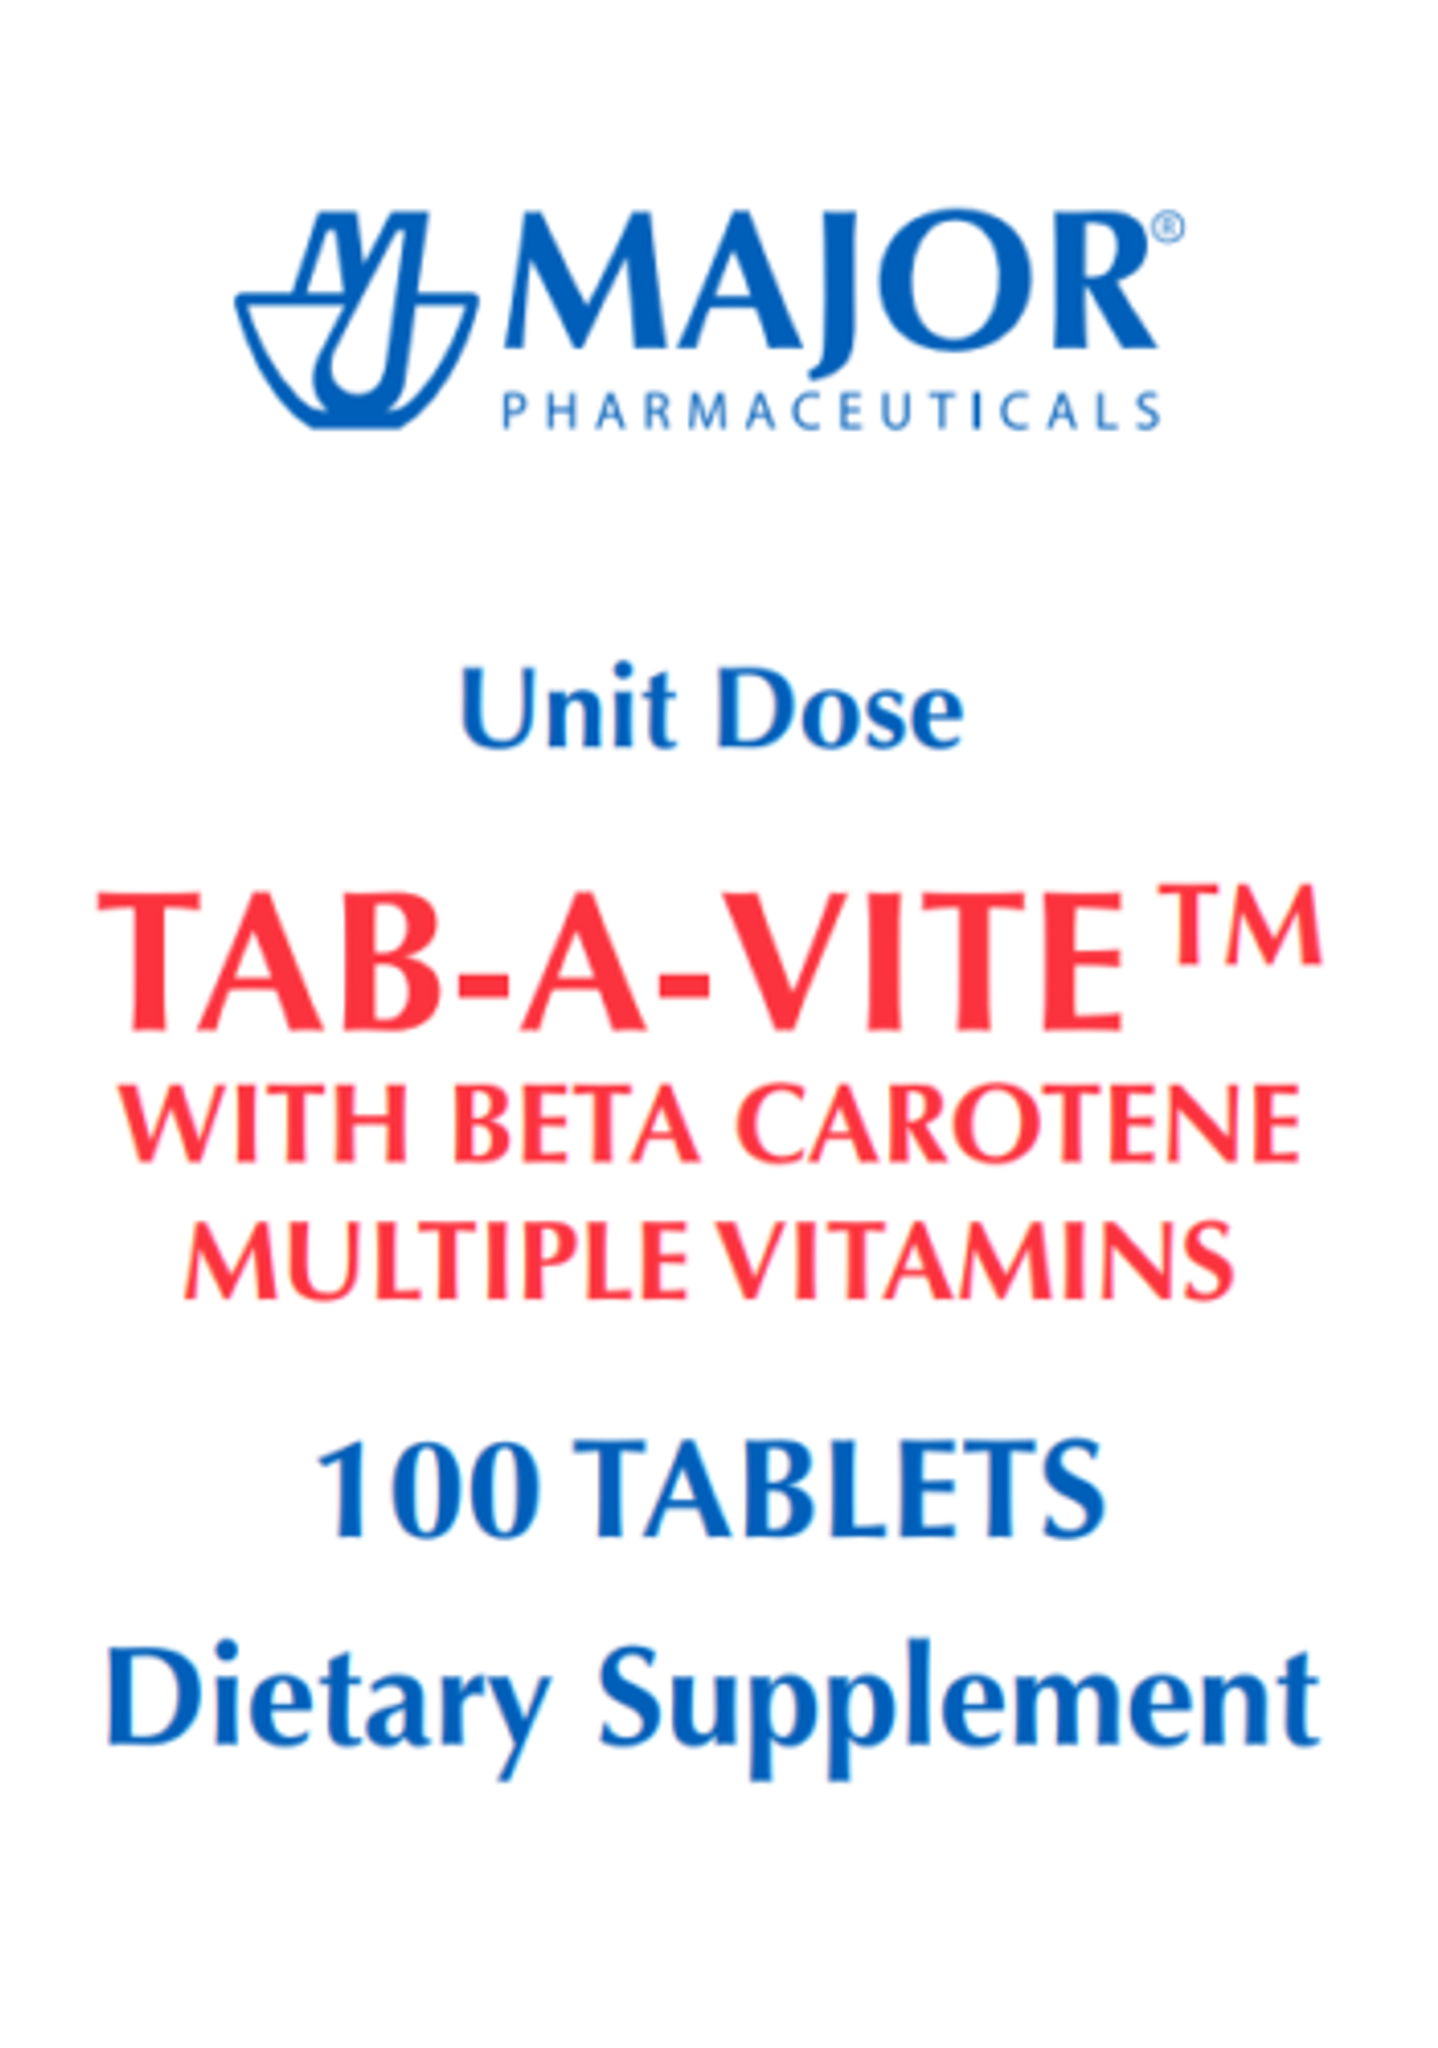 vitamin r tab